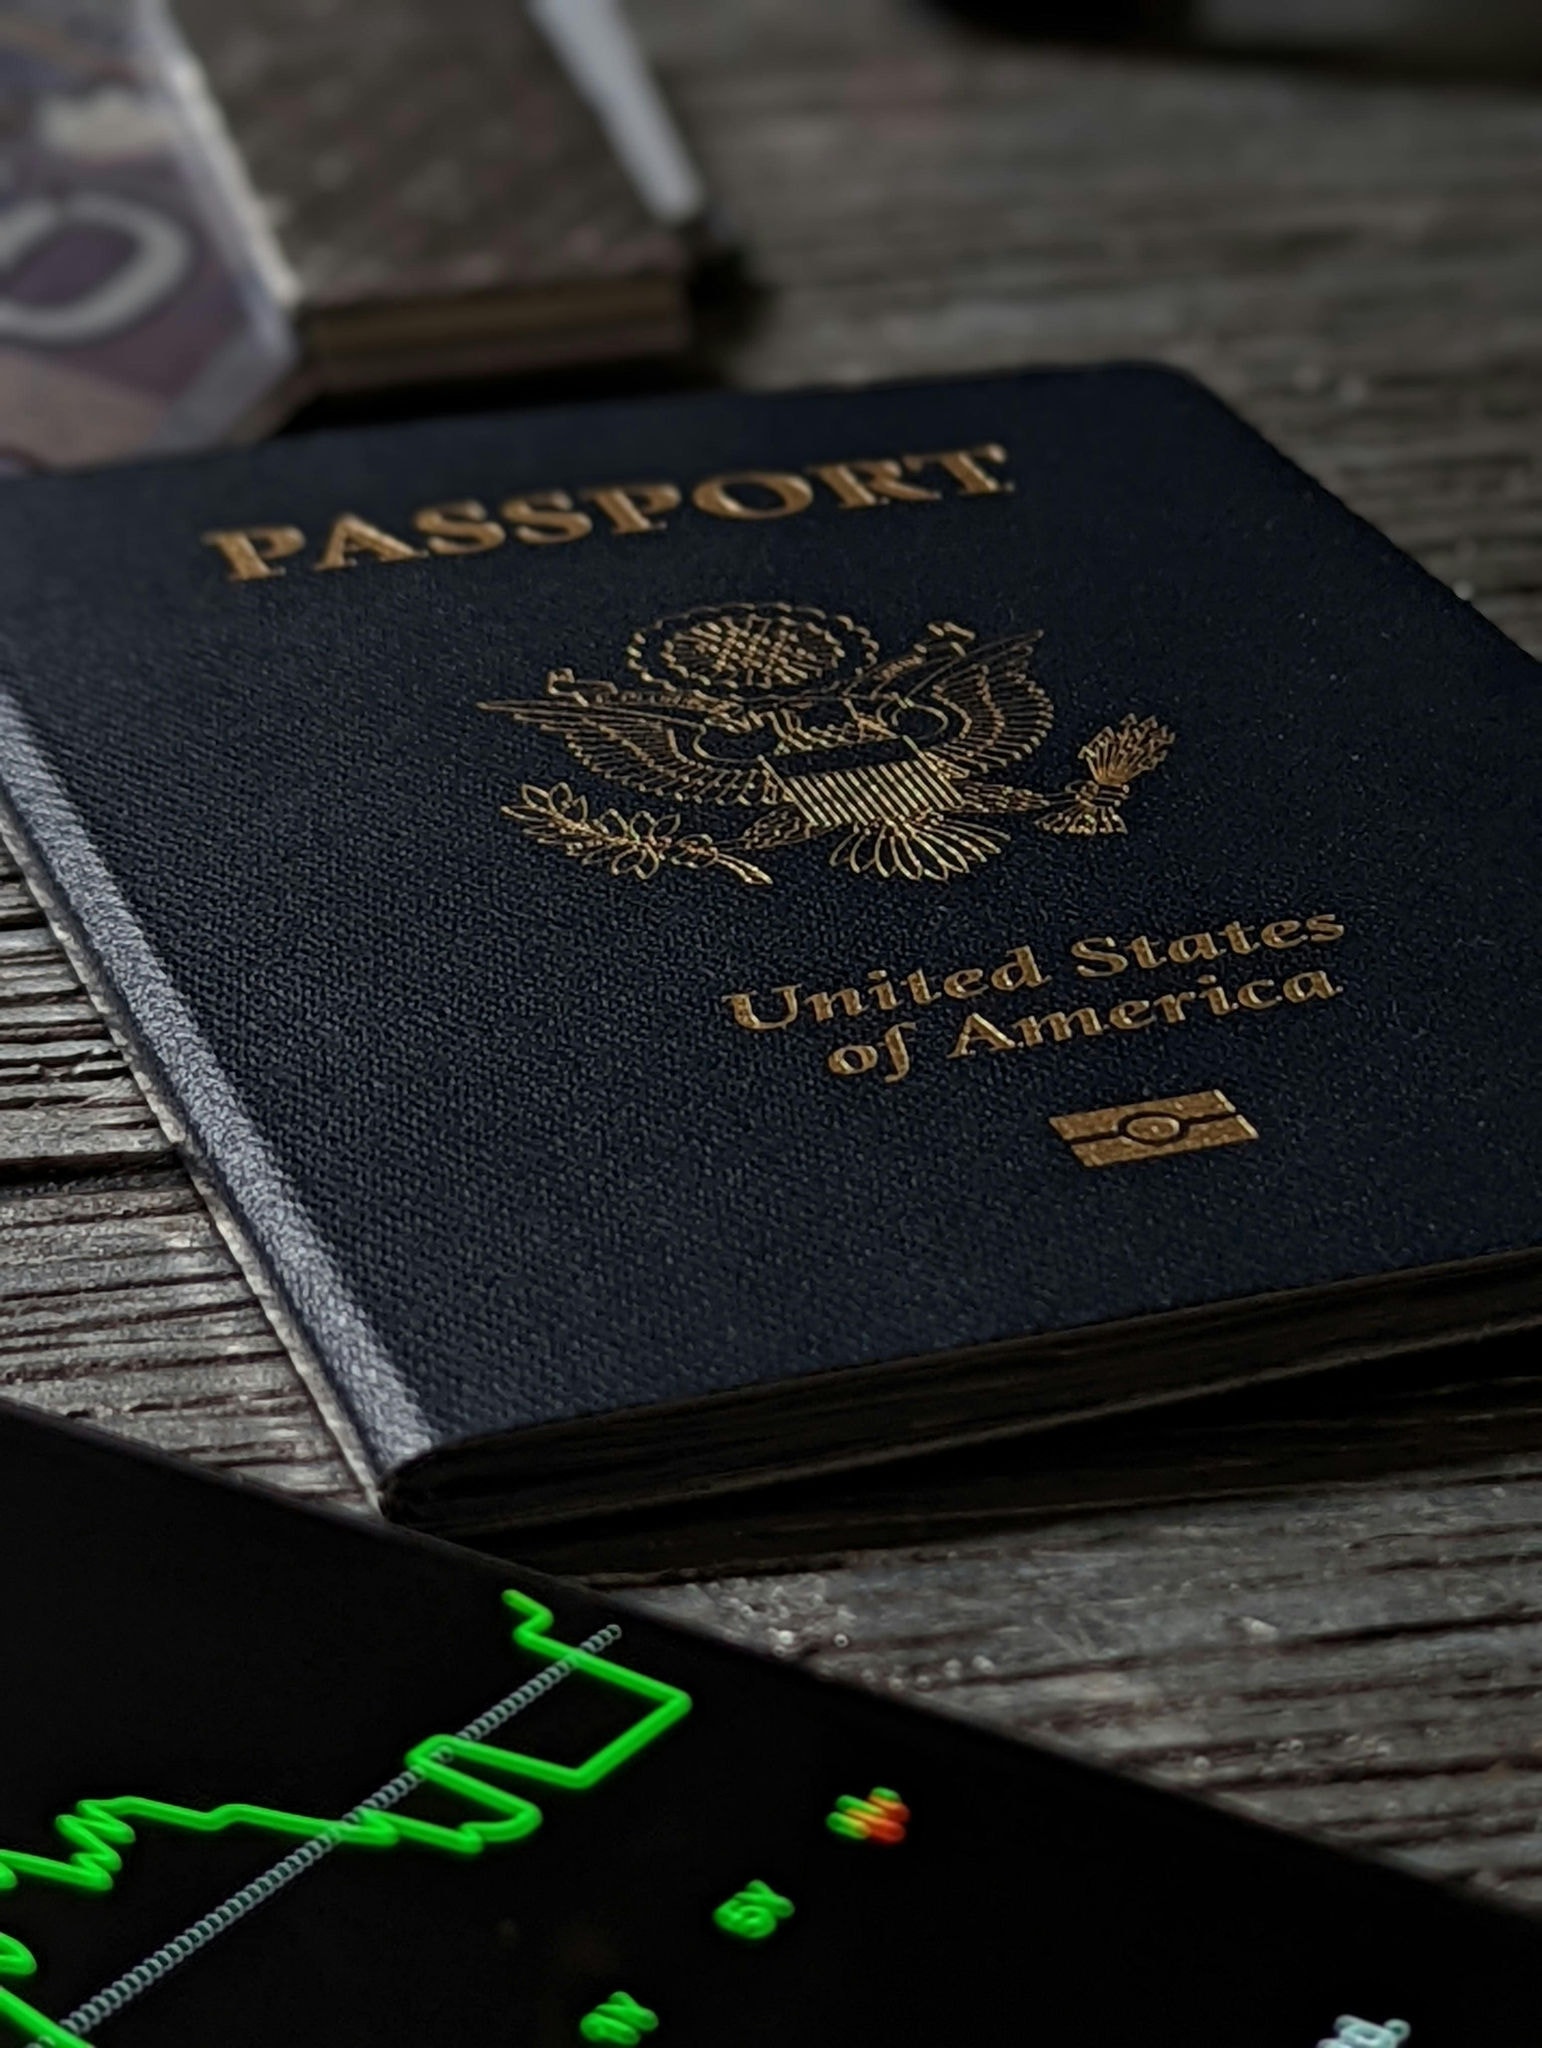 Passaporte dos Estados Unidos